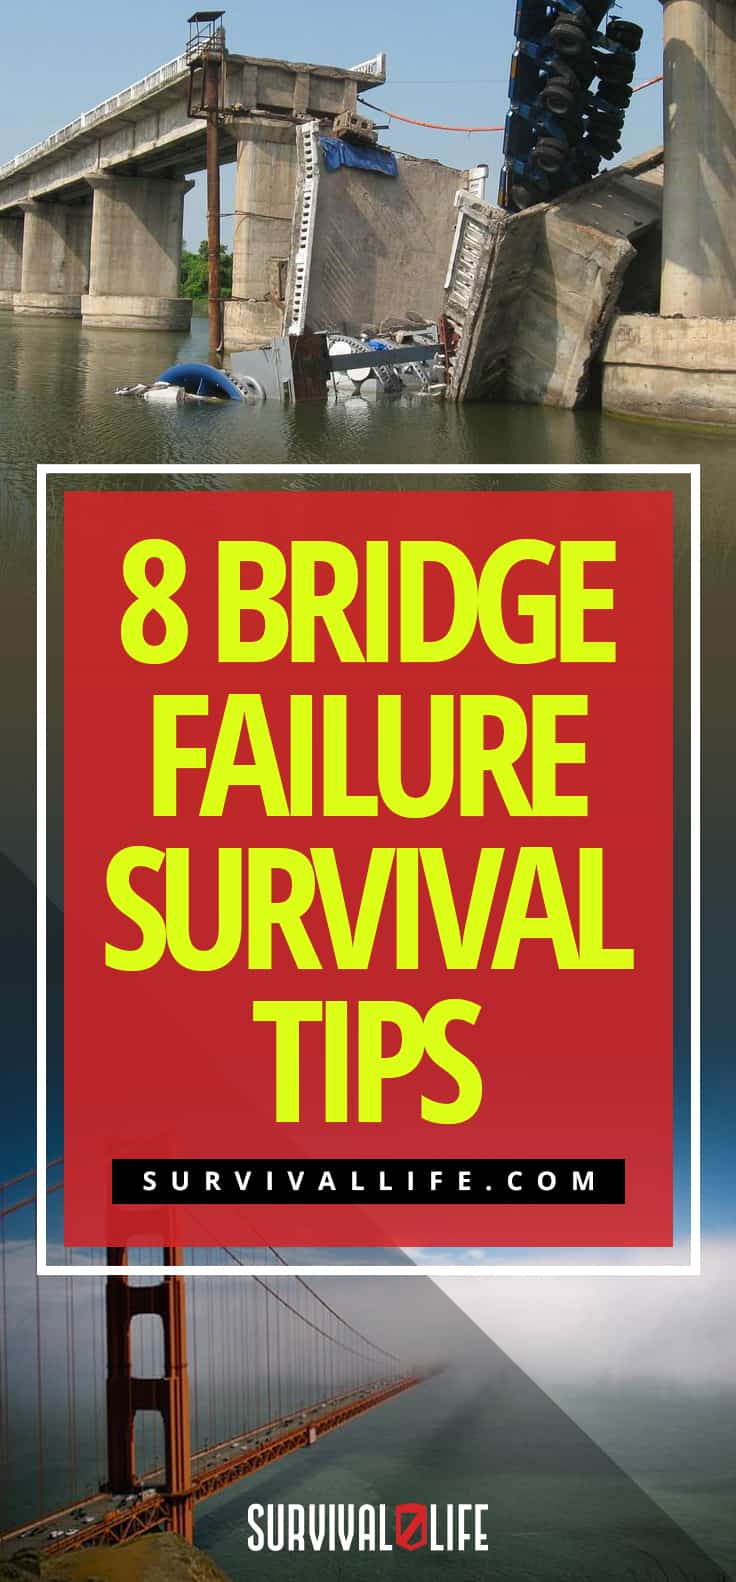 8 Bridge Failure Survival Tips